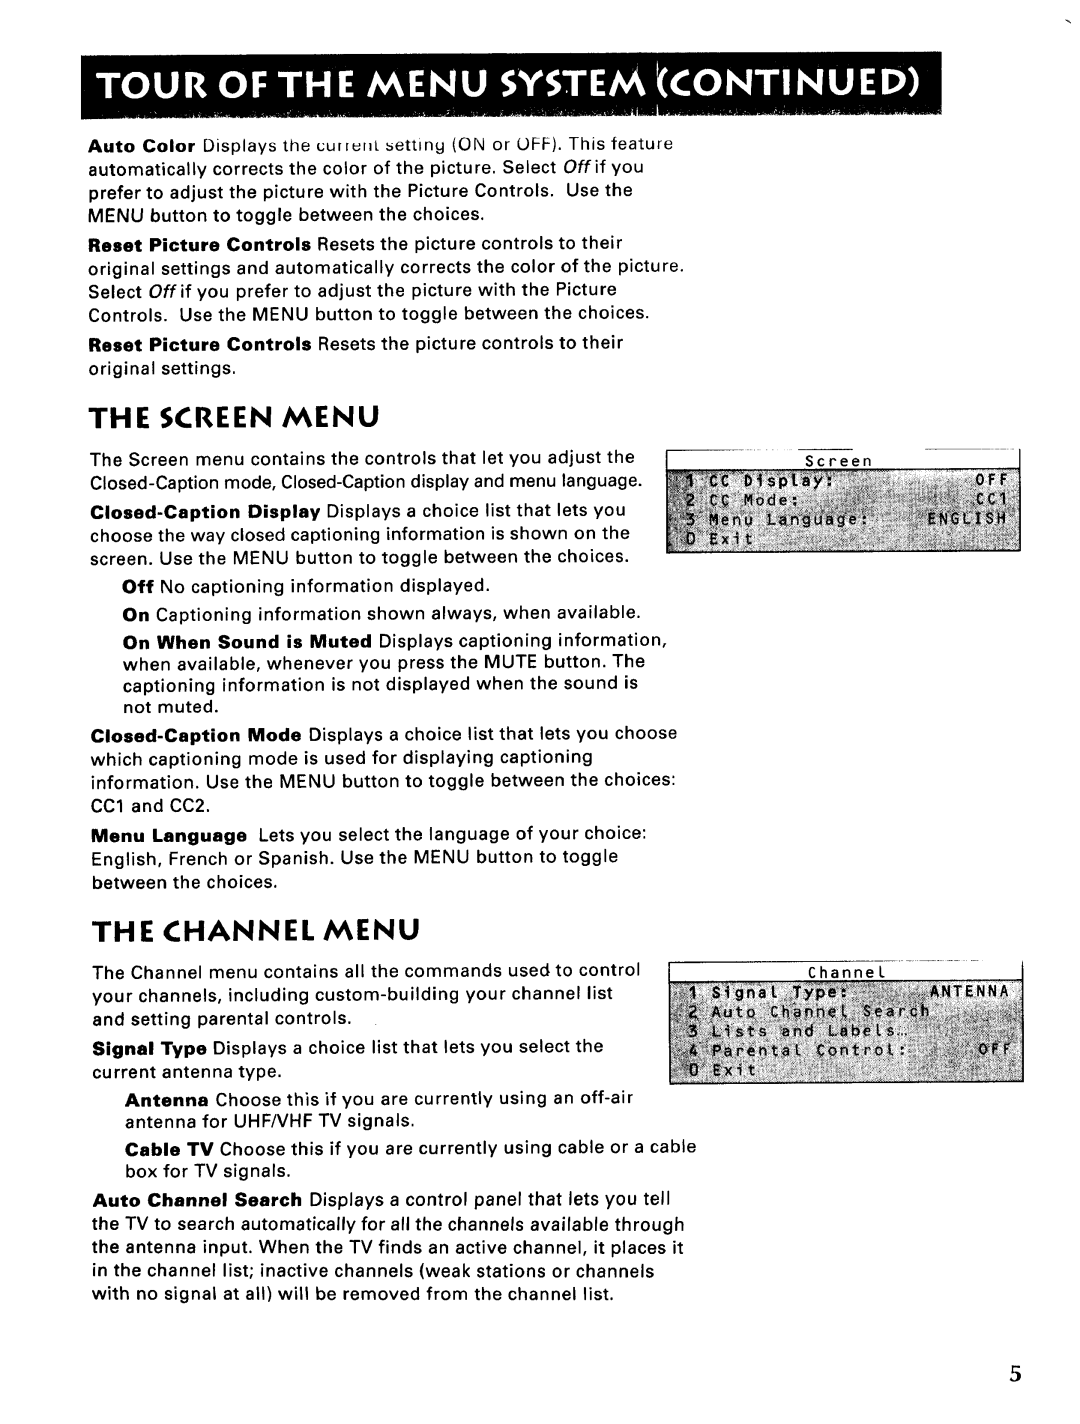 Sears 274.4345869A owner manual The Screen Menu, The Channel Menu 